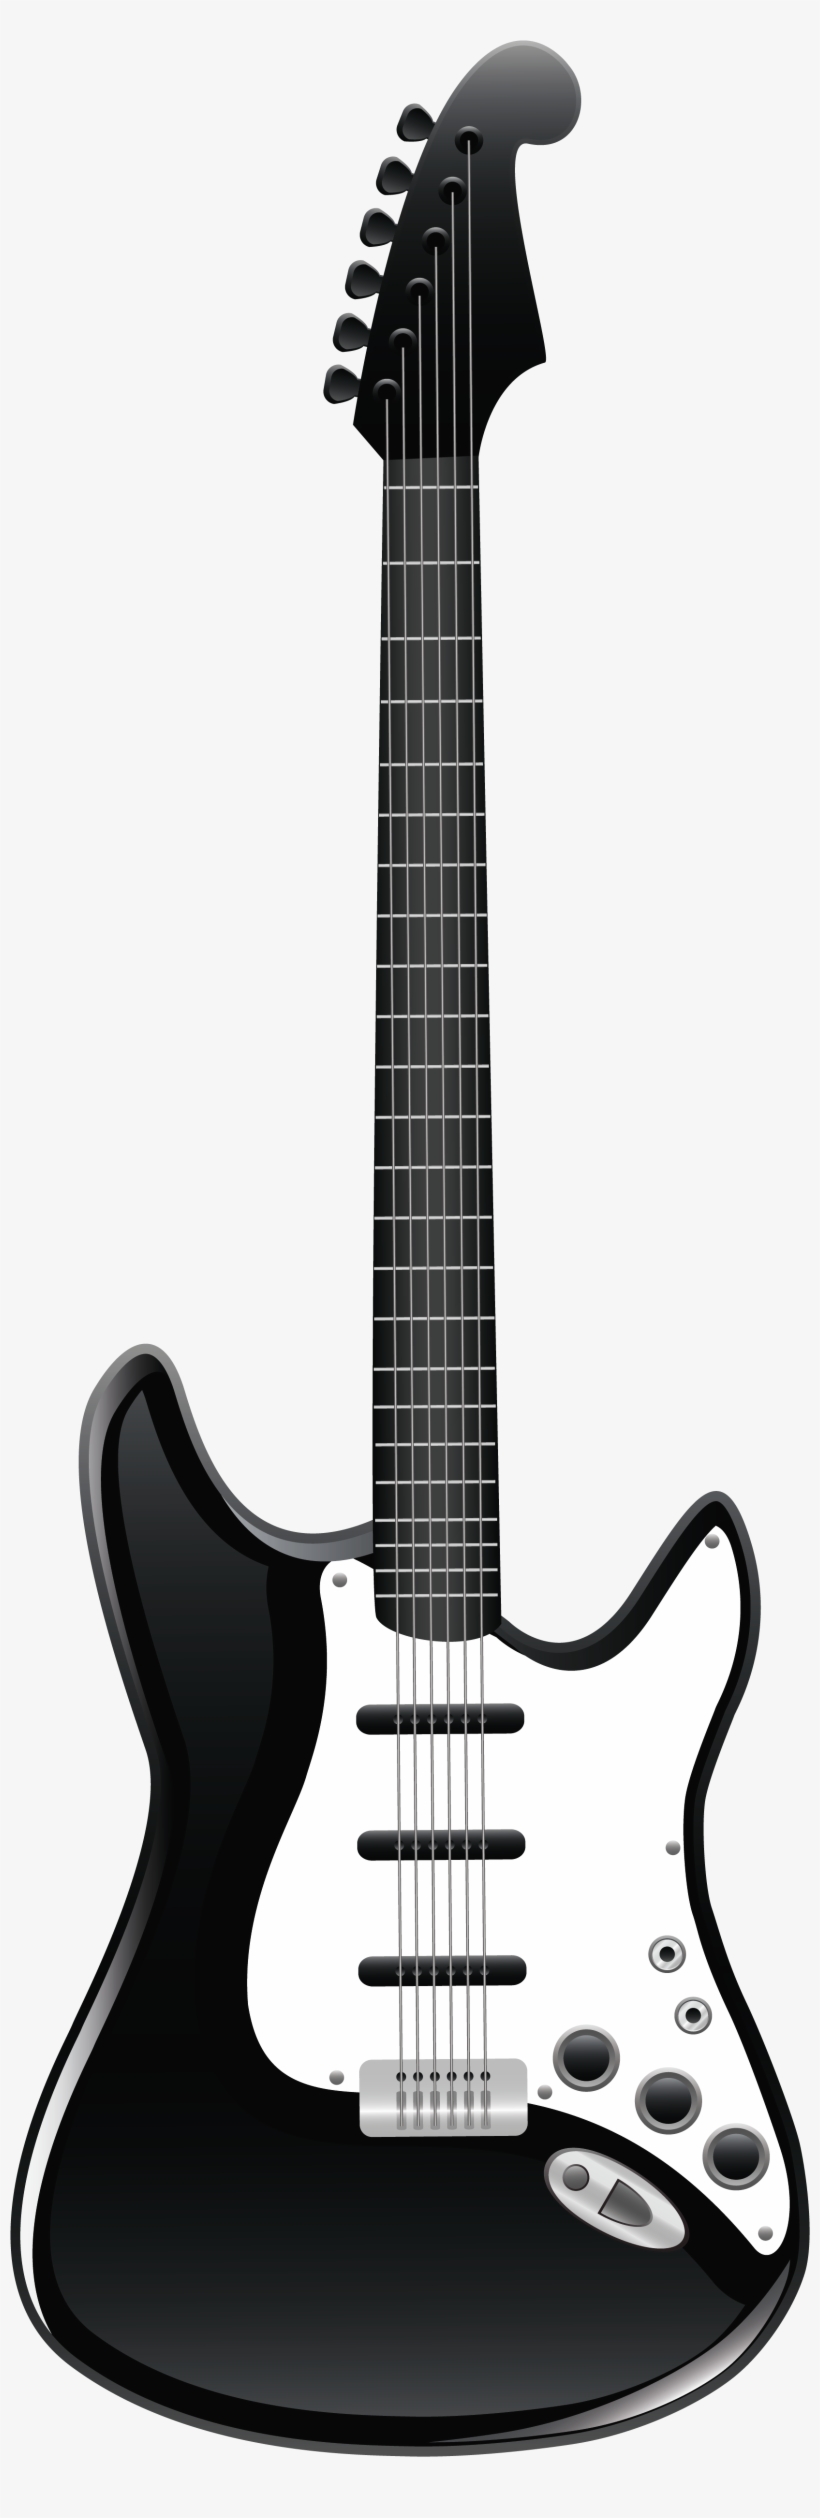 Guitar Clipart Black And White - Guitar Png Clip Art, transparent png #22293